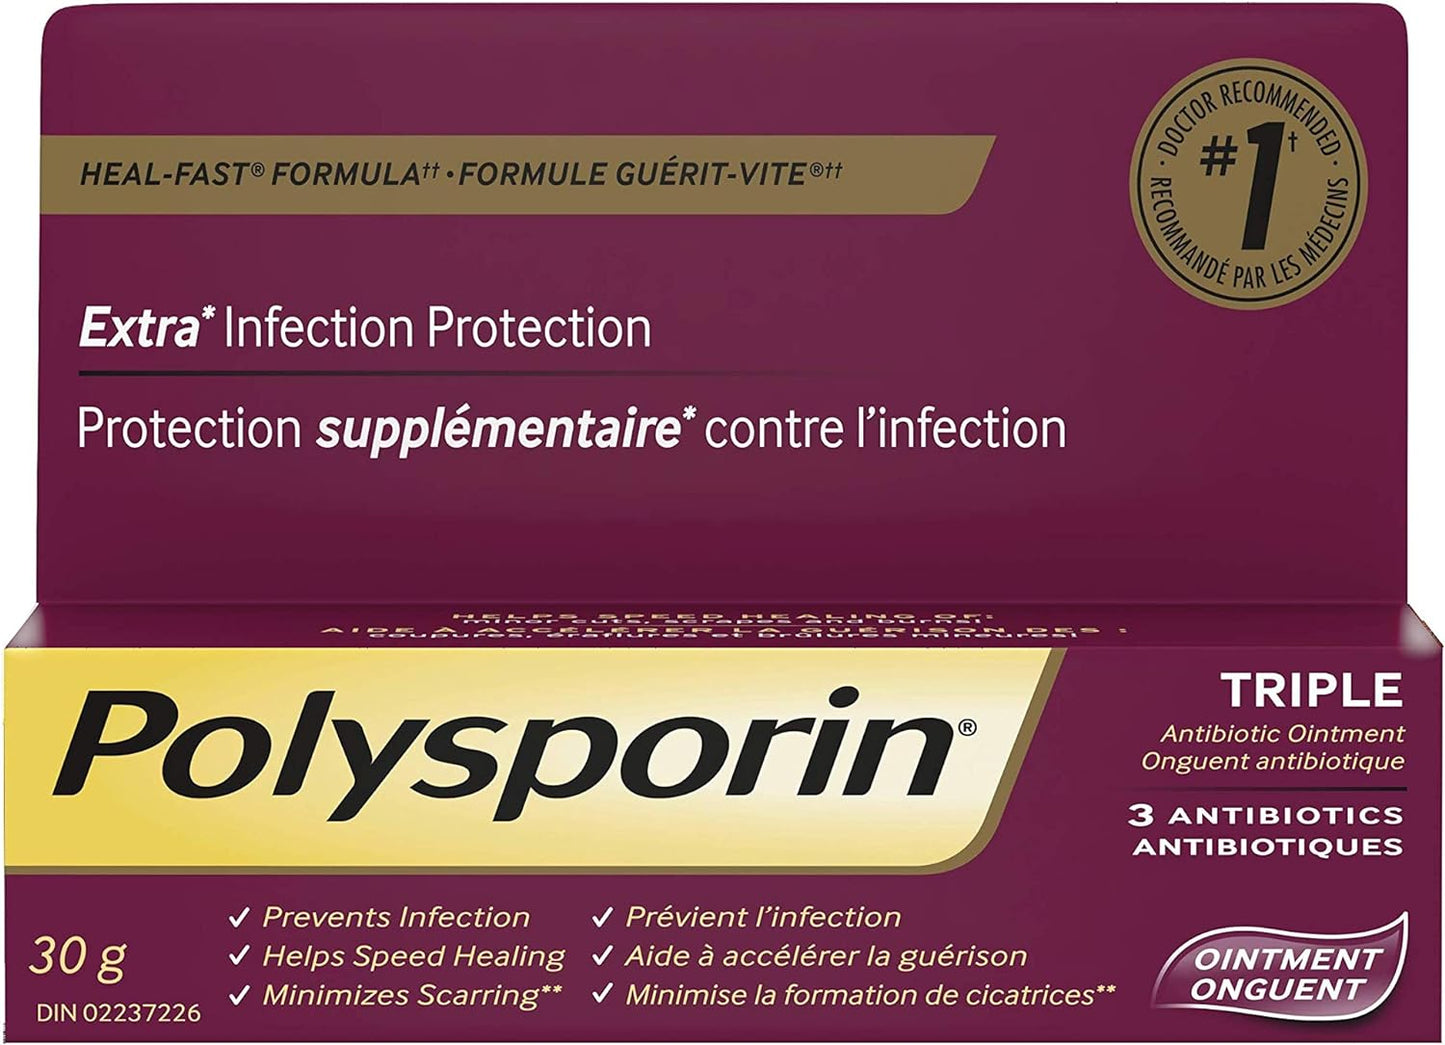 Polysporin Original Ointment - 3 Antibiotics 30g